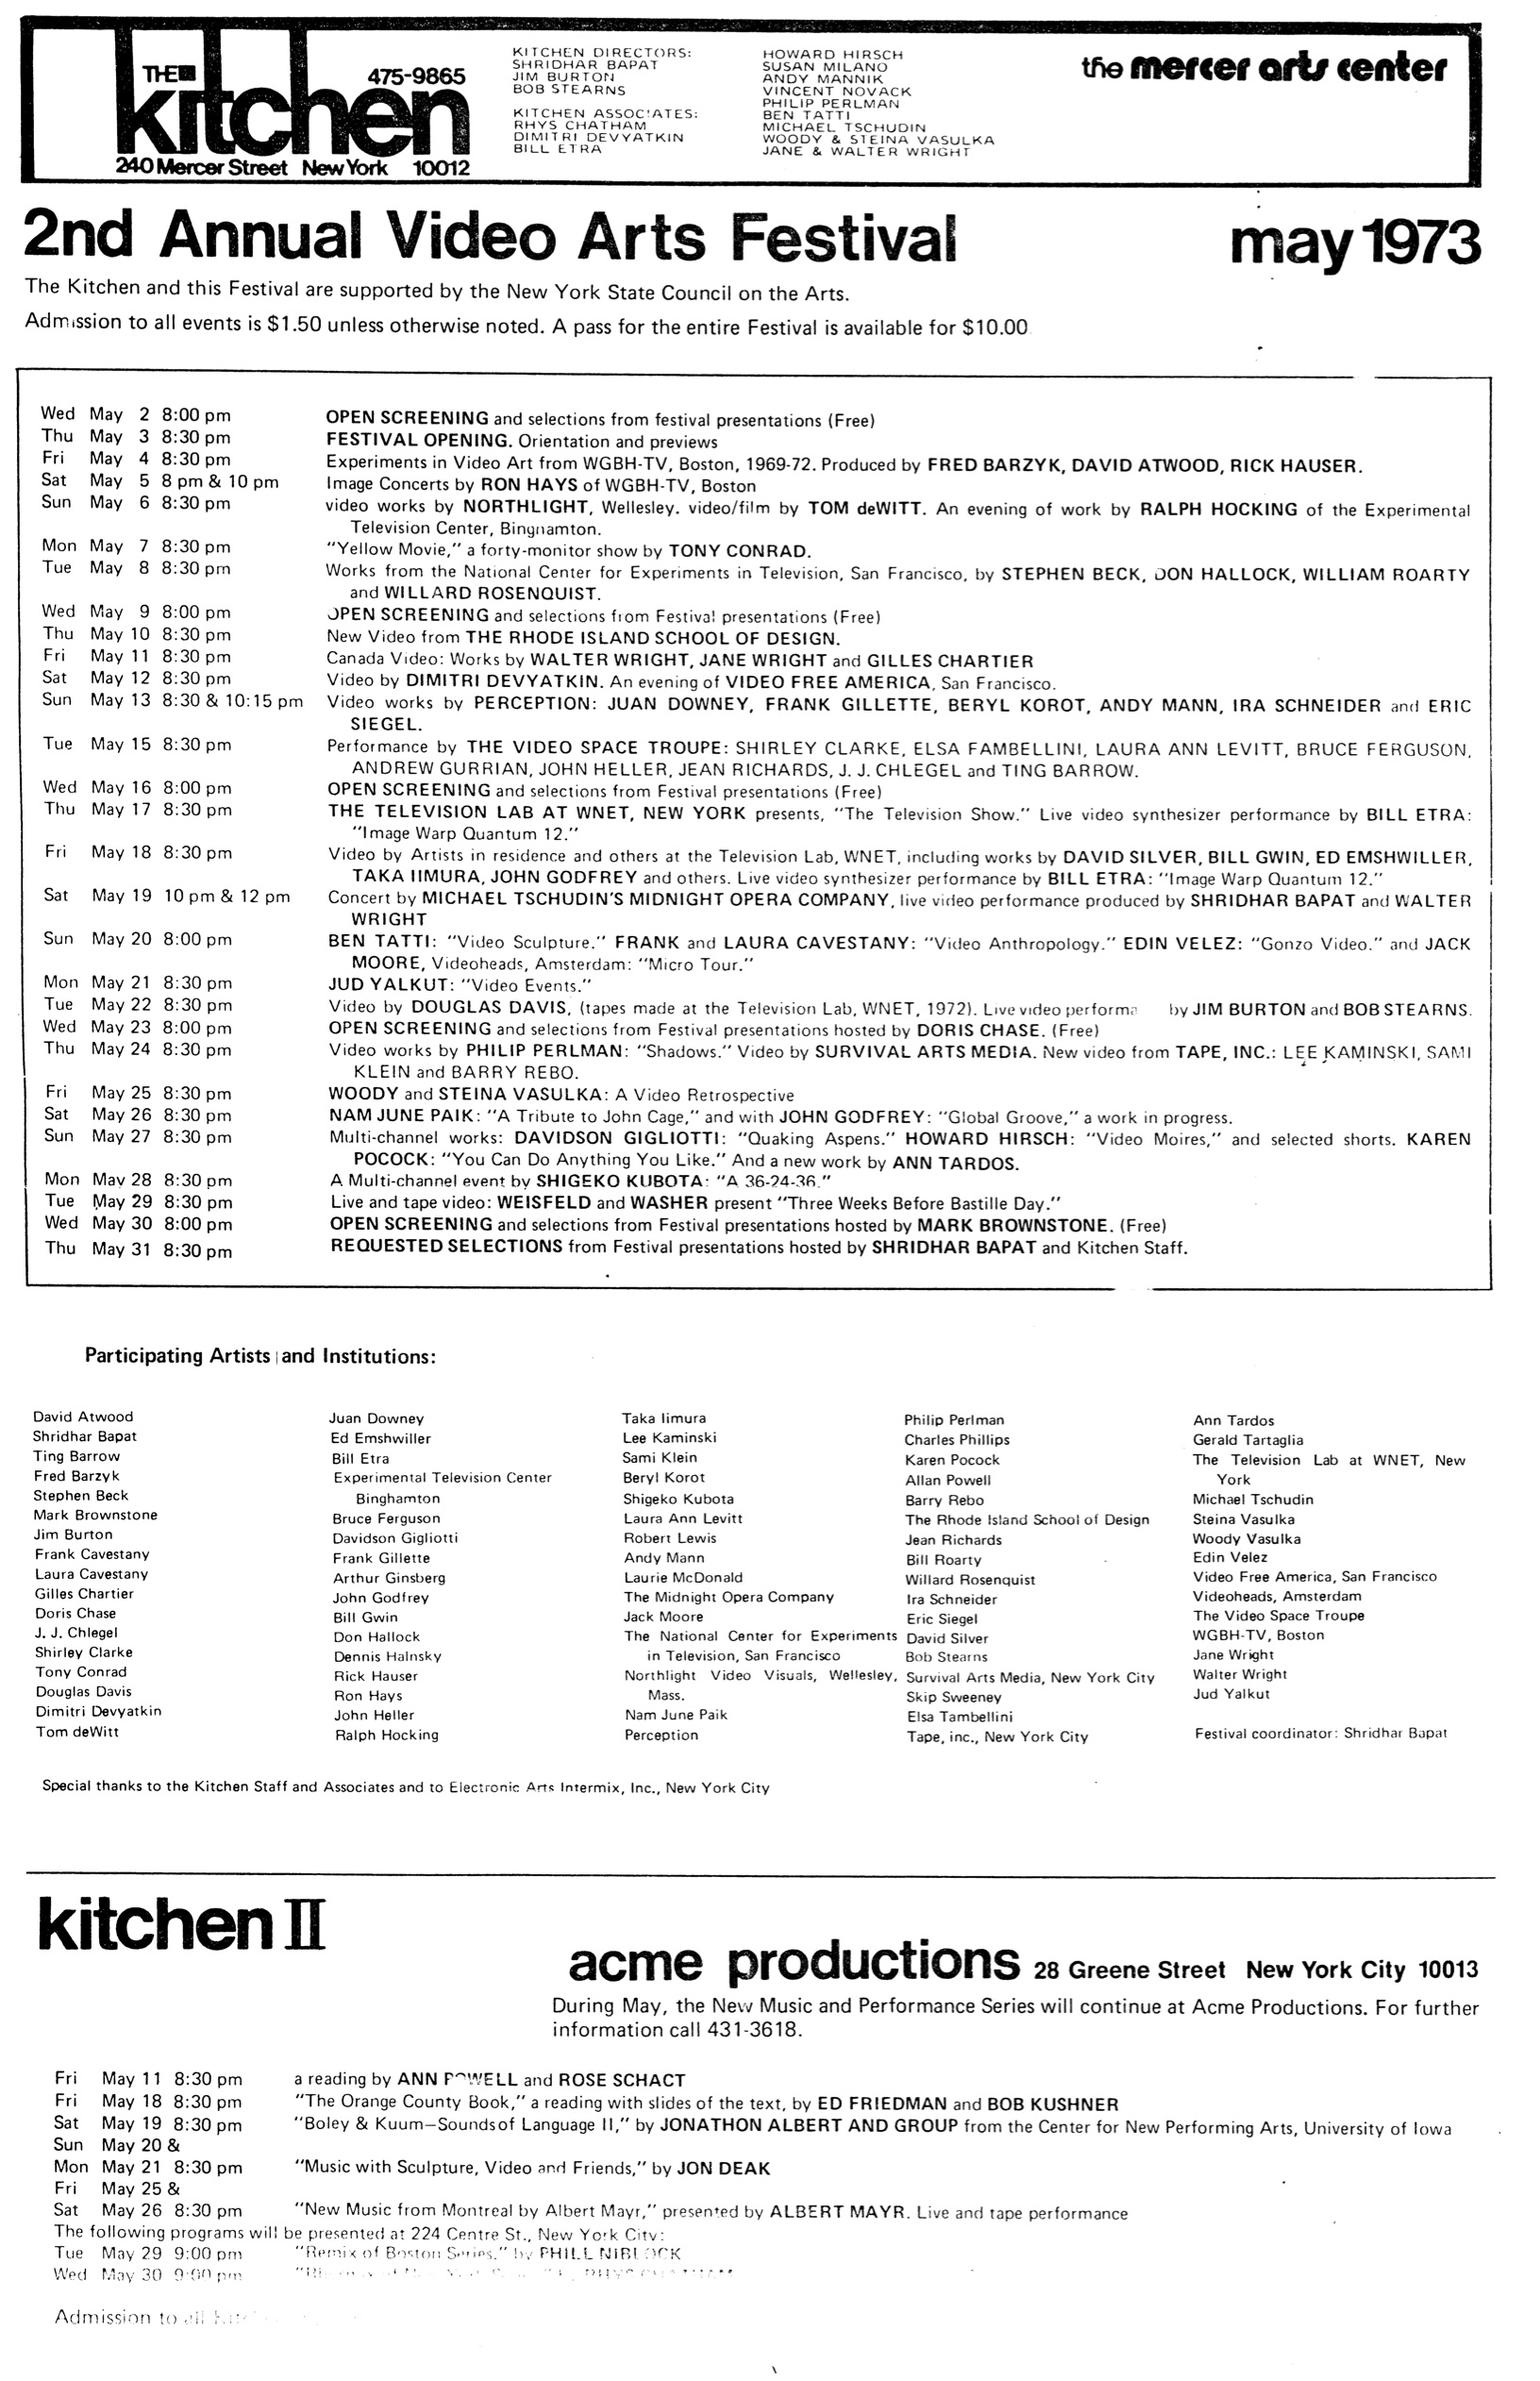 May 1973 Kitchen Calendar